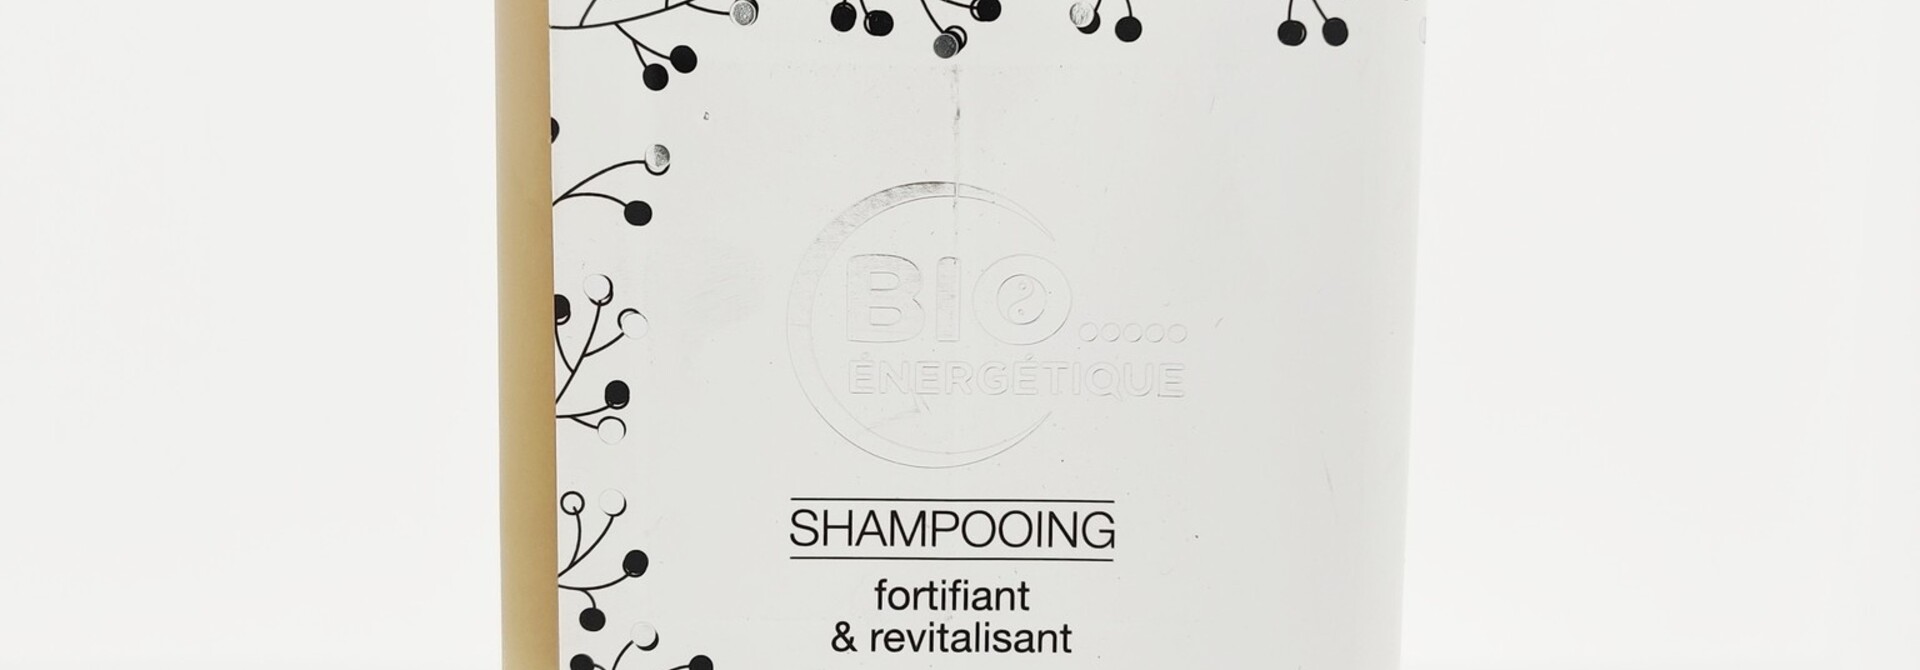 VIGOR Shampoo / Fortifying & revitalizing